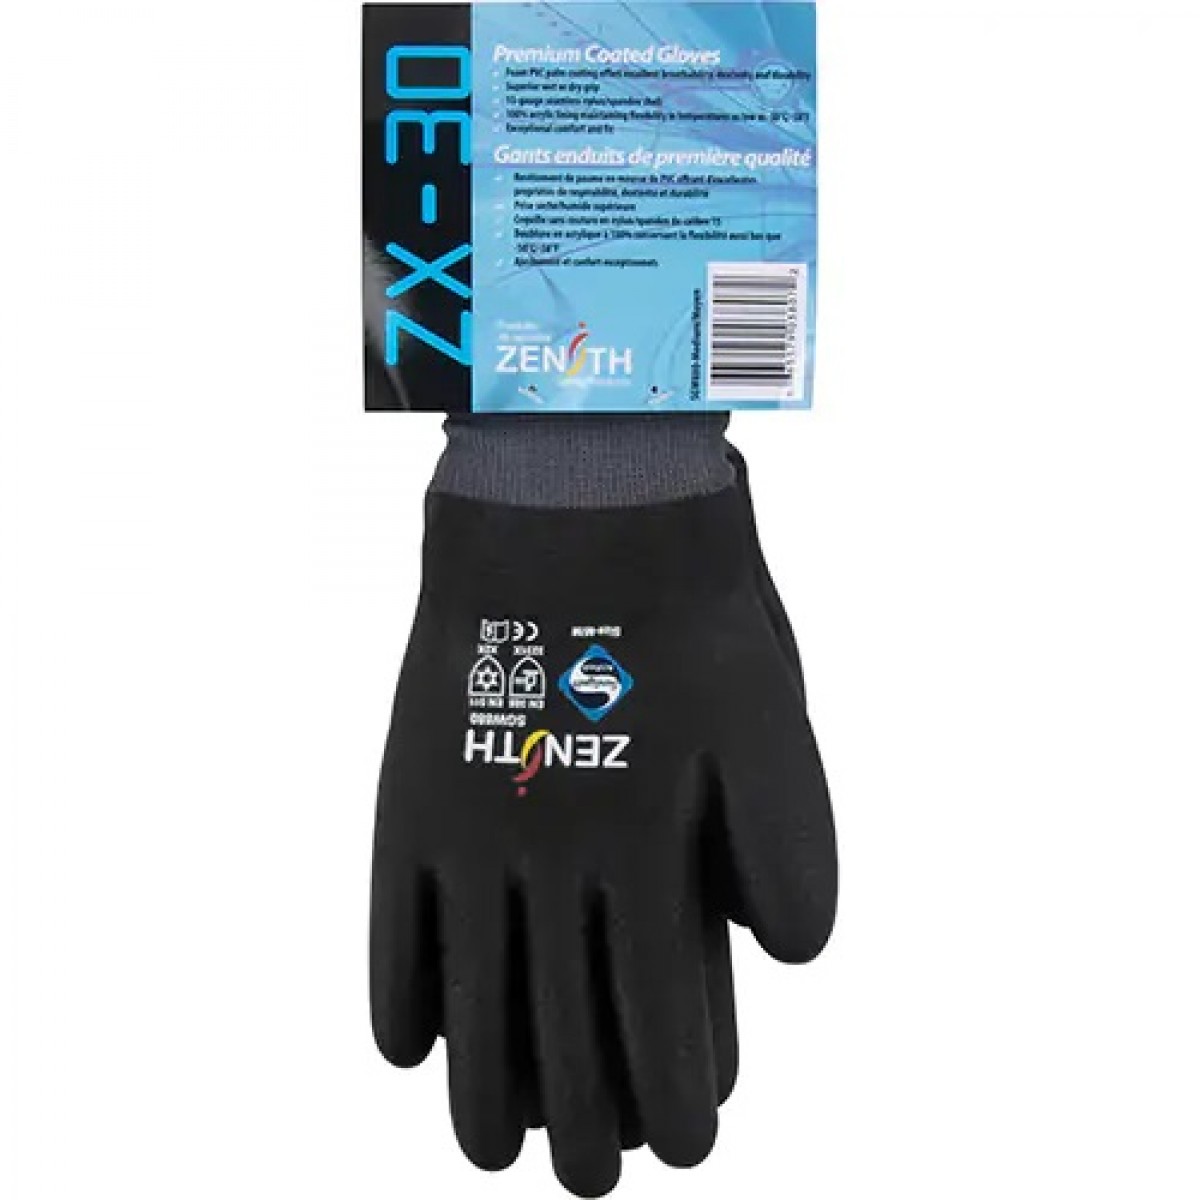 ZX-30° Premium Coated Gloves, X-Large, Foam PVC Coating, 15 Gauge, Nylon  Shell - Black - SGW882